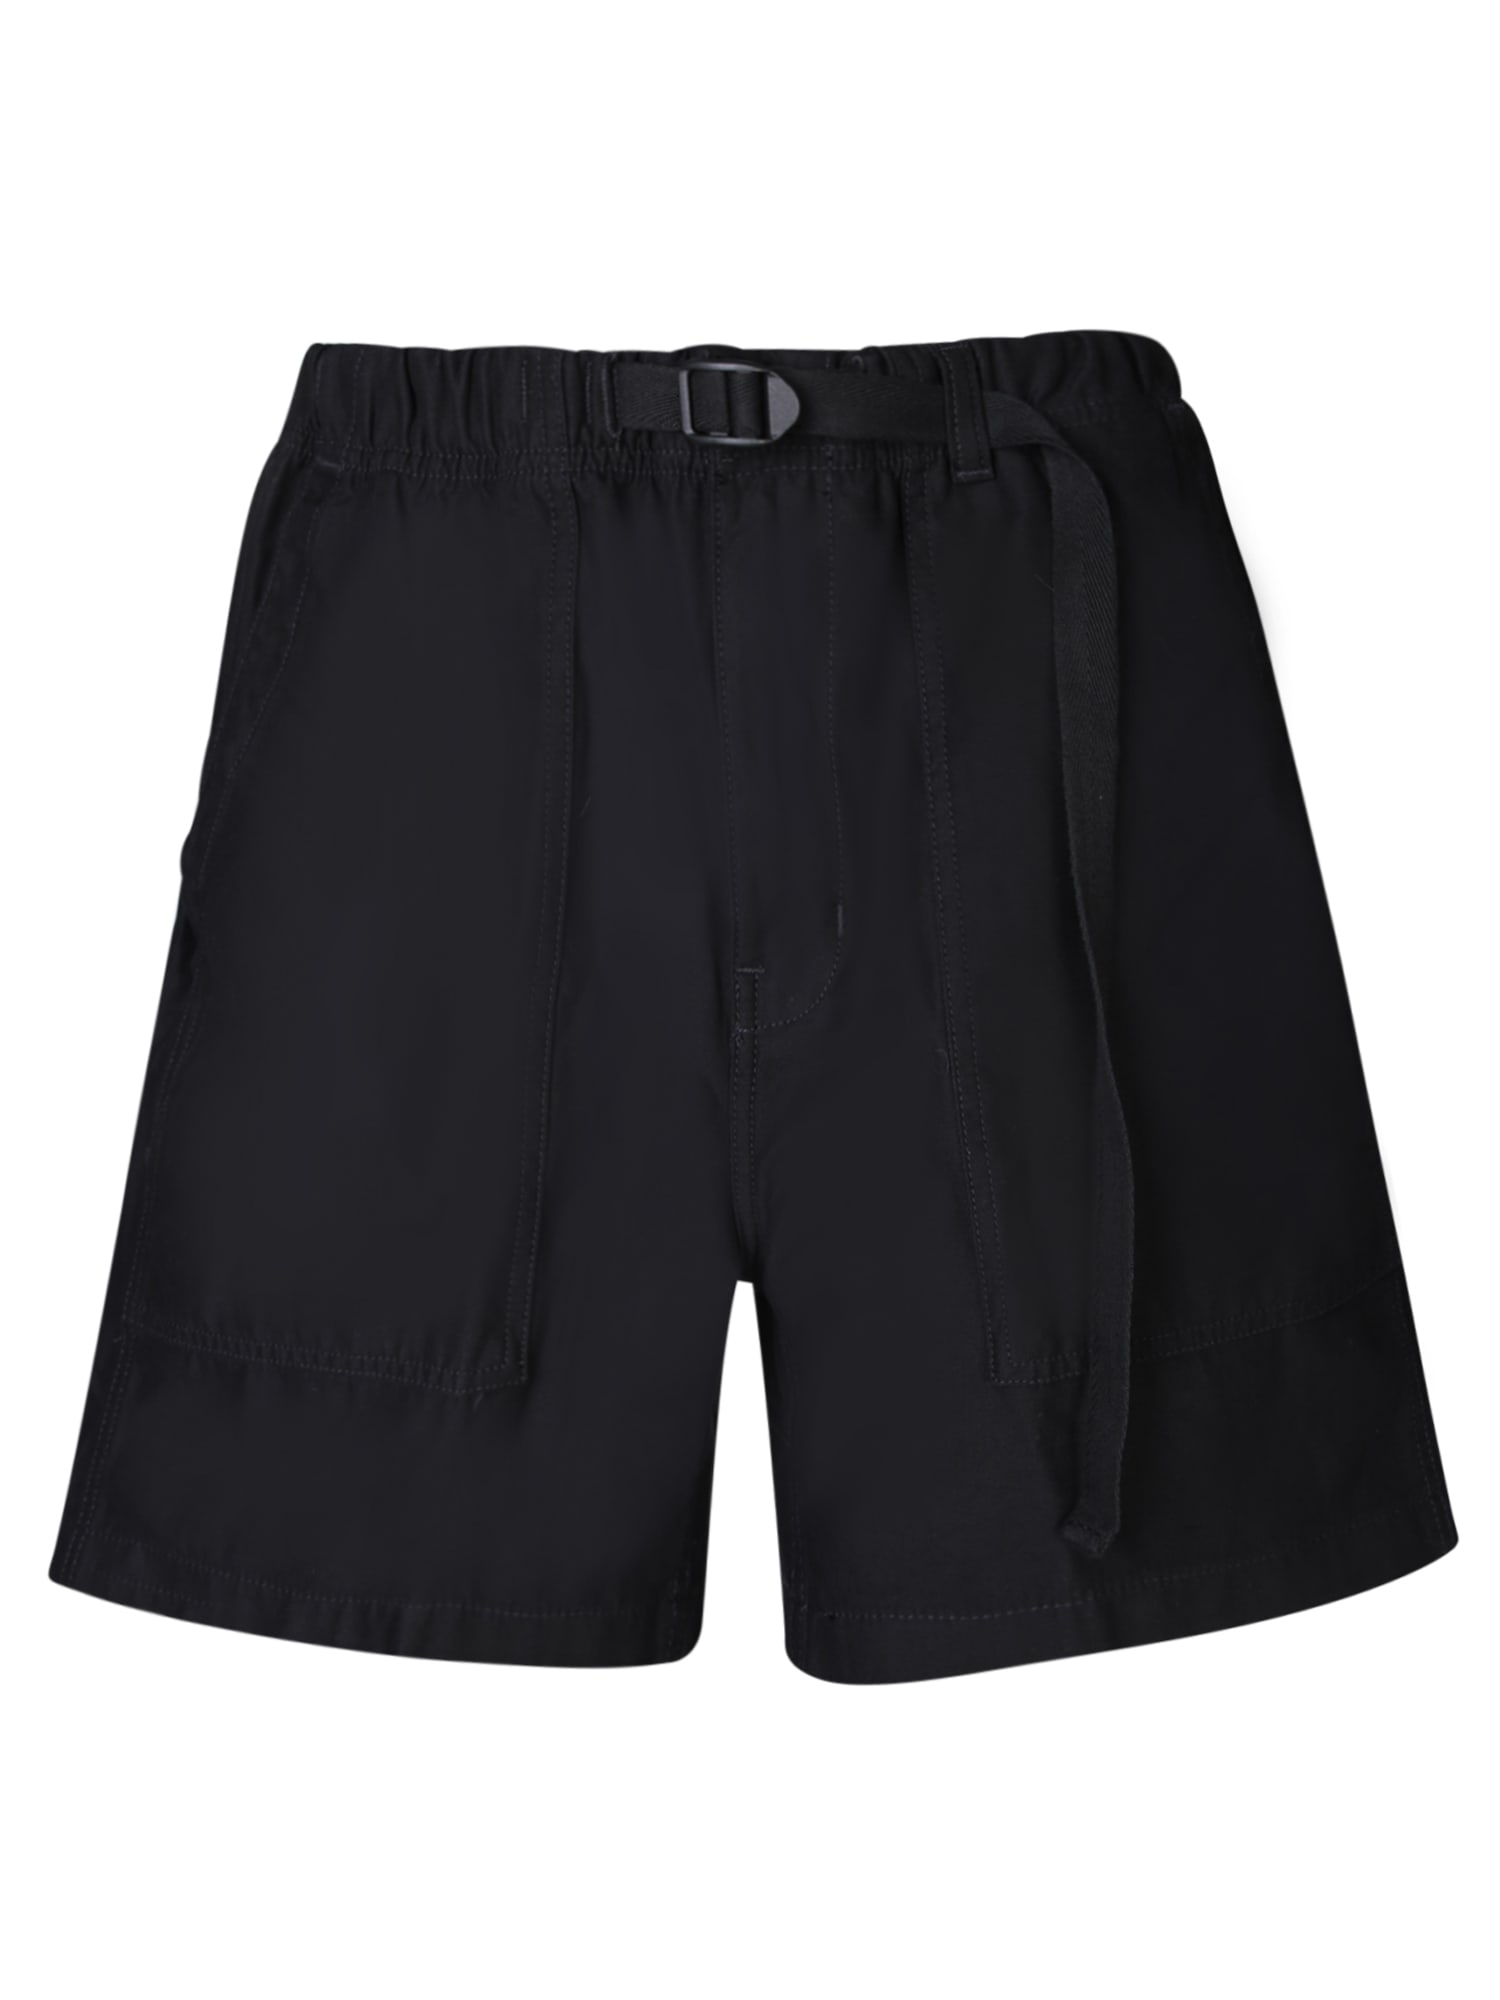 Carhartt Hayworth Black Bermuda Shorts